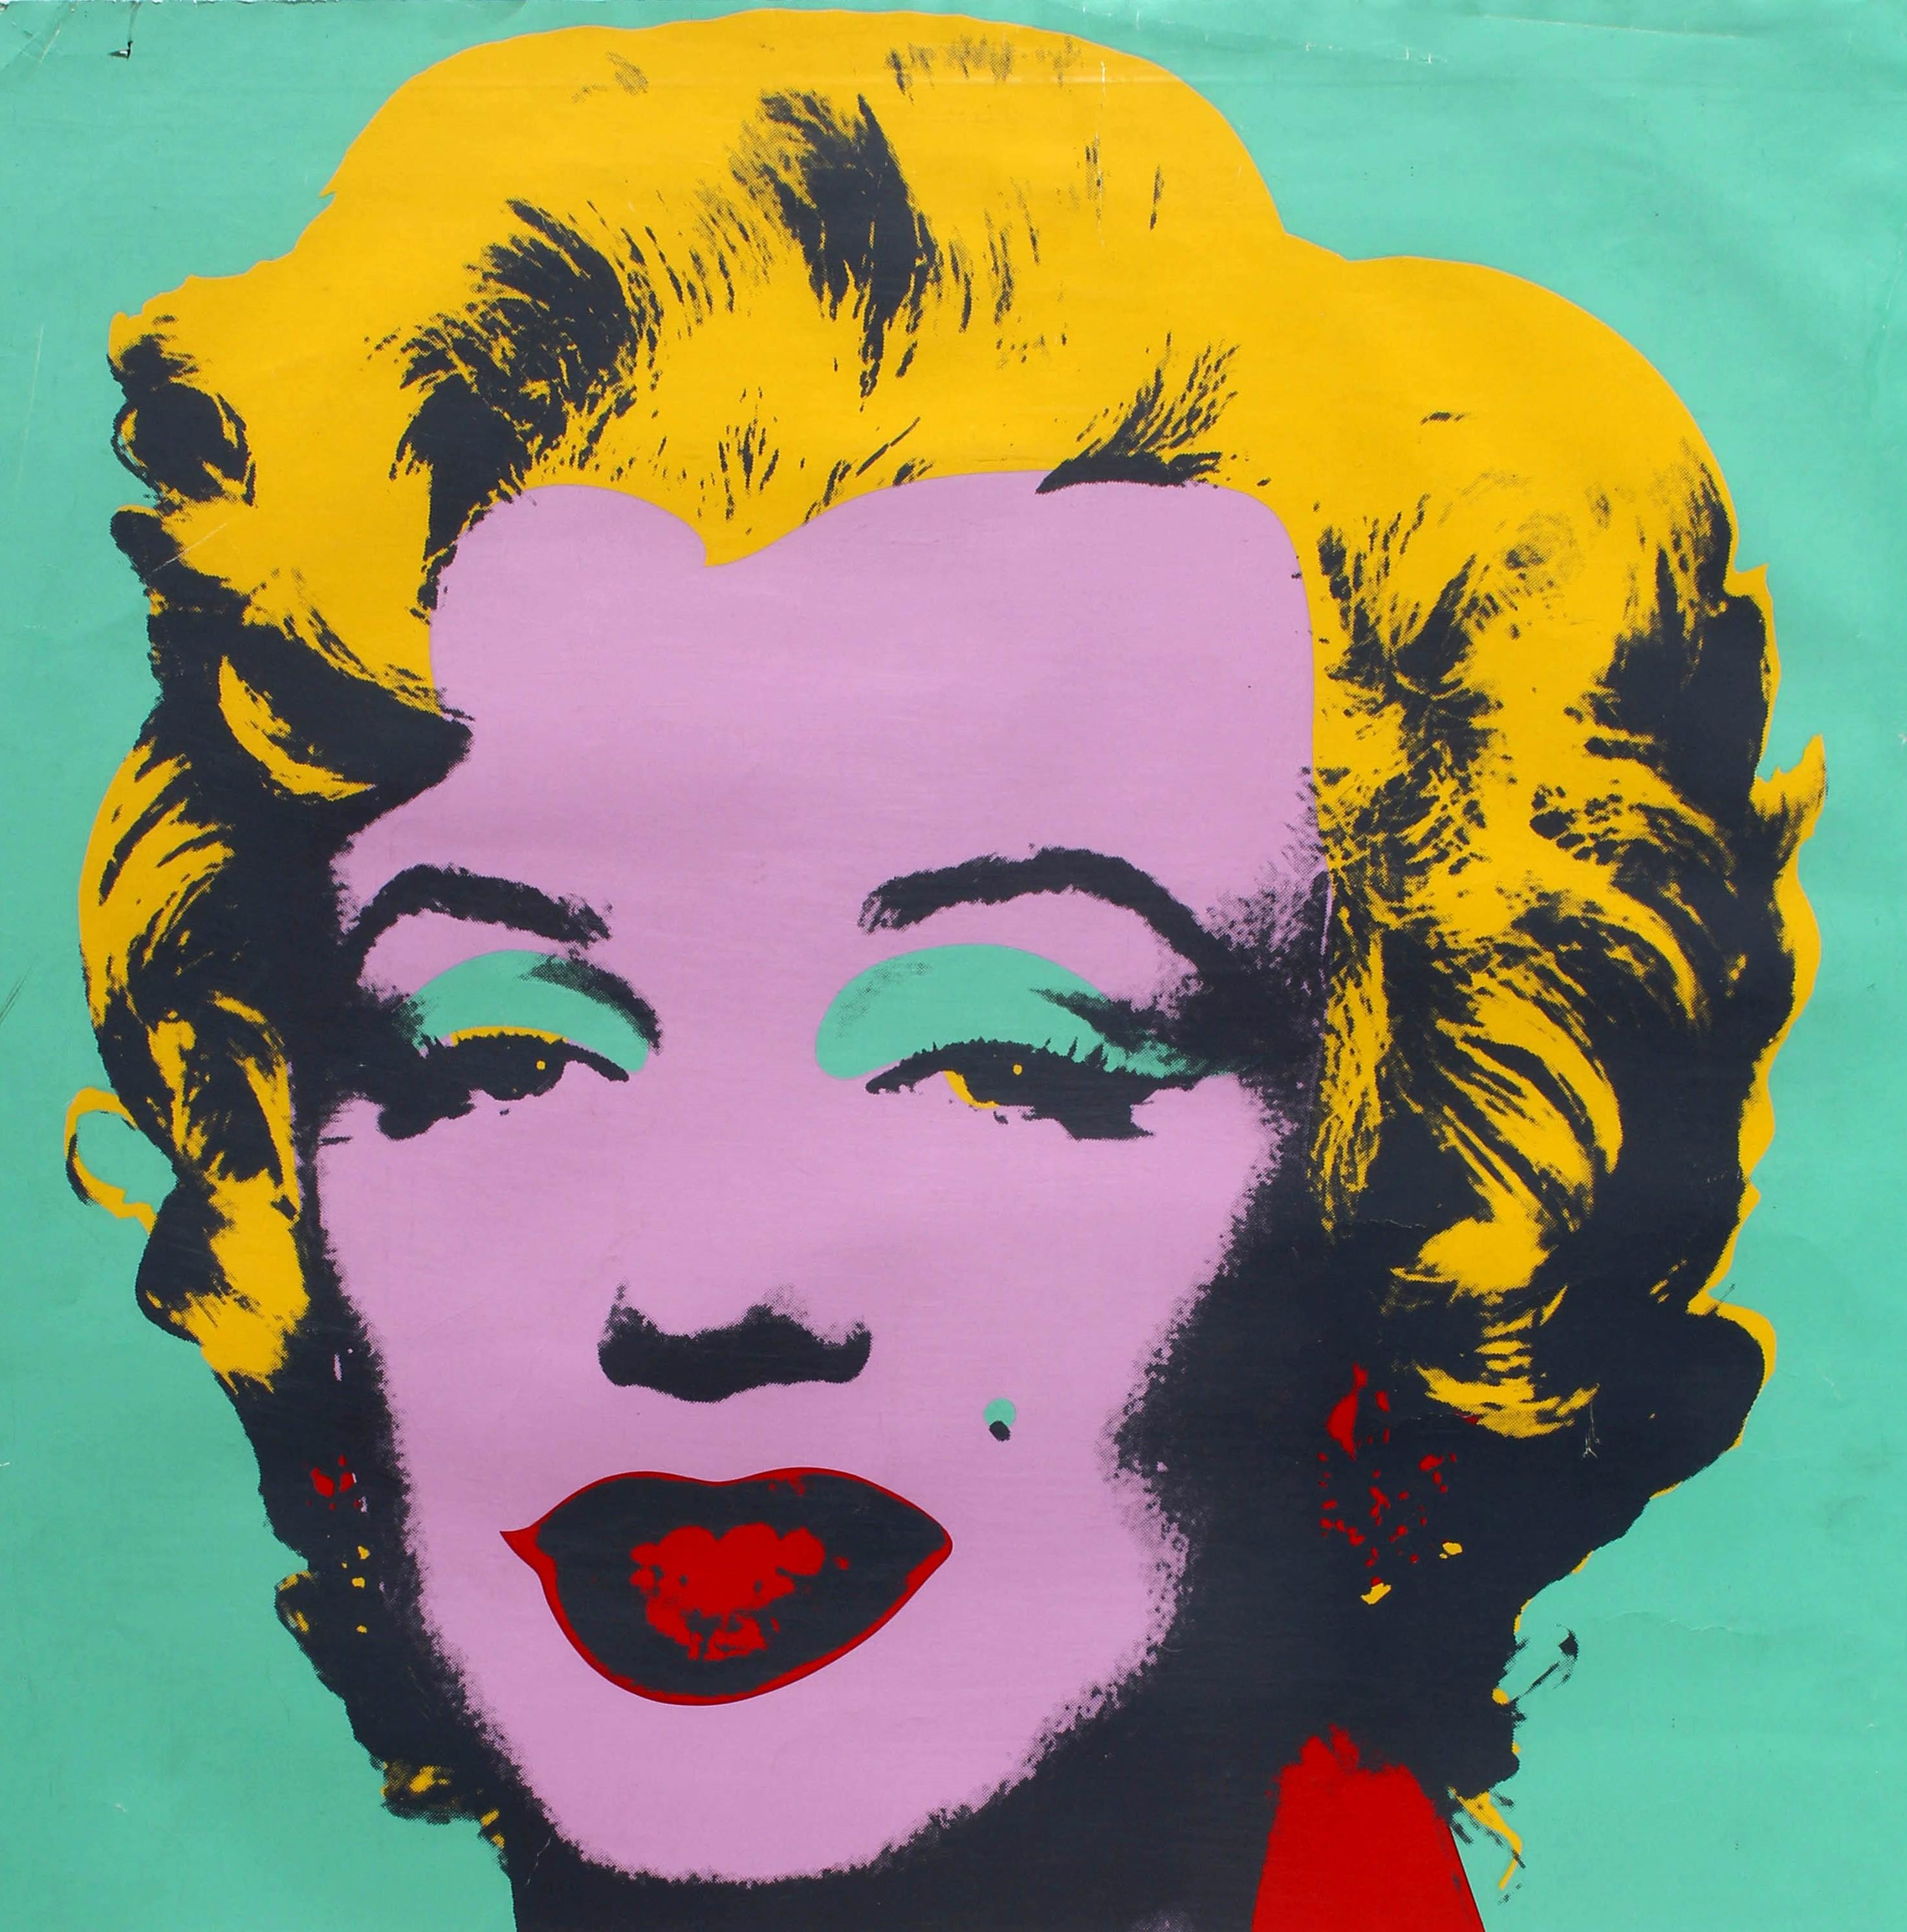 Original Vintage Andy Warhol Art Exhibition Poster Marilyn Monroe Pop Art Design - Print by (after) Andy Warhol